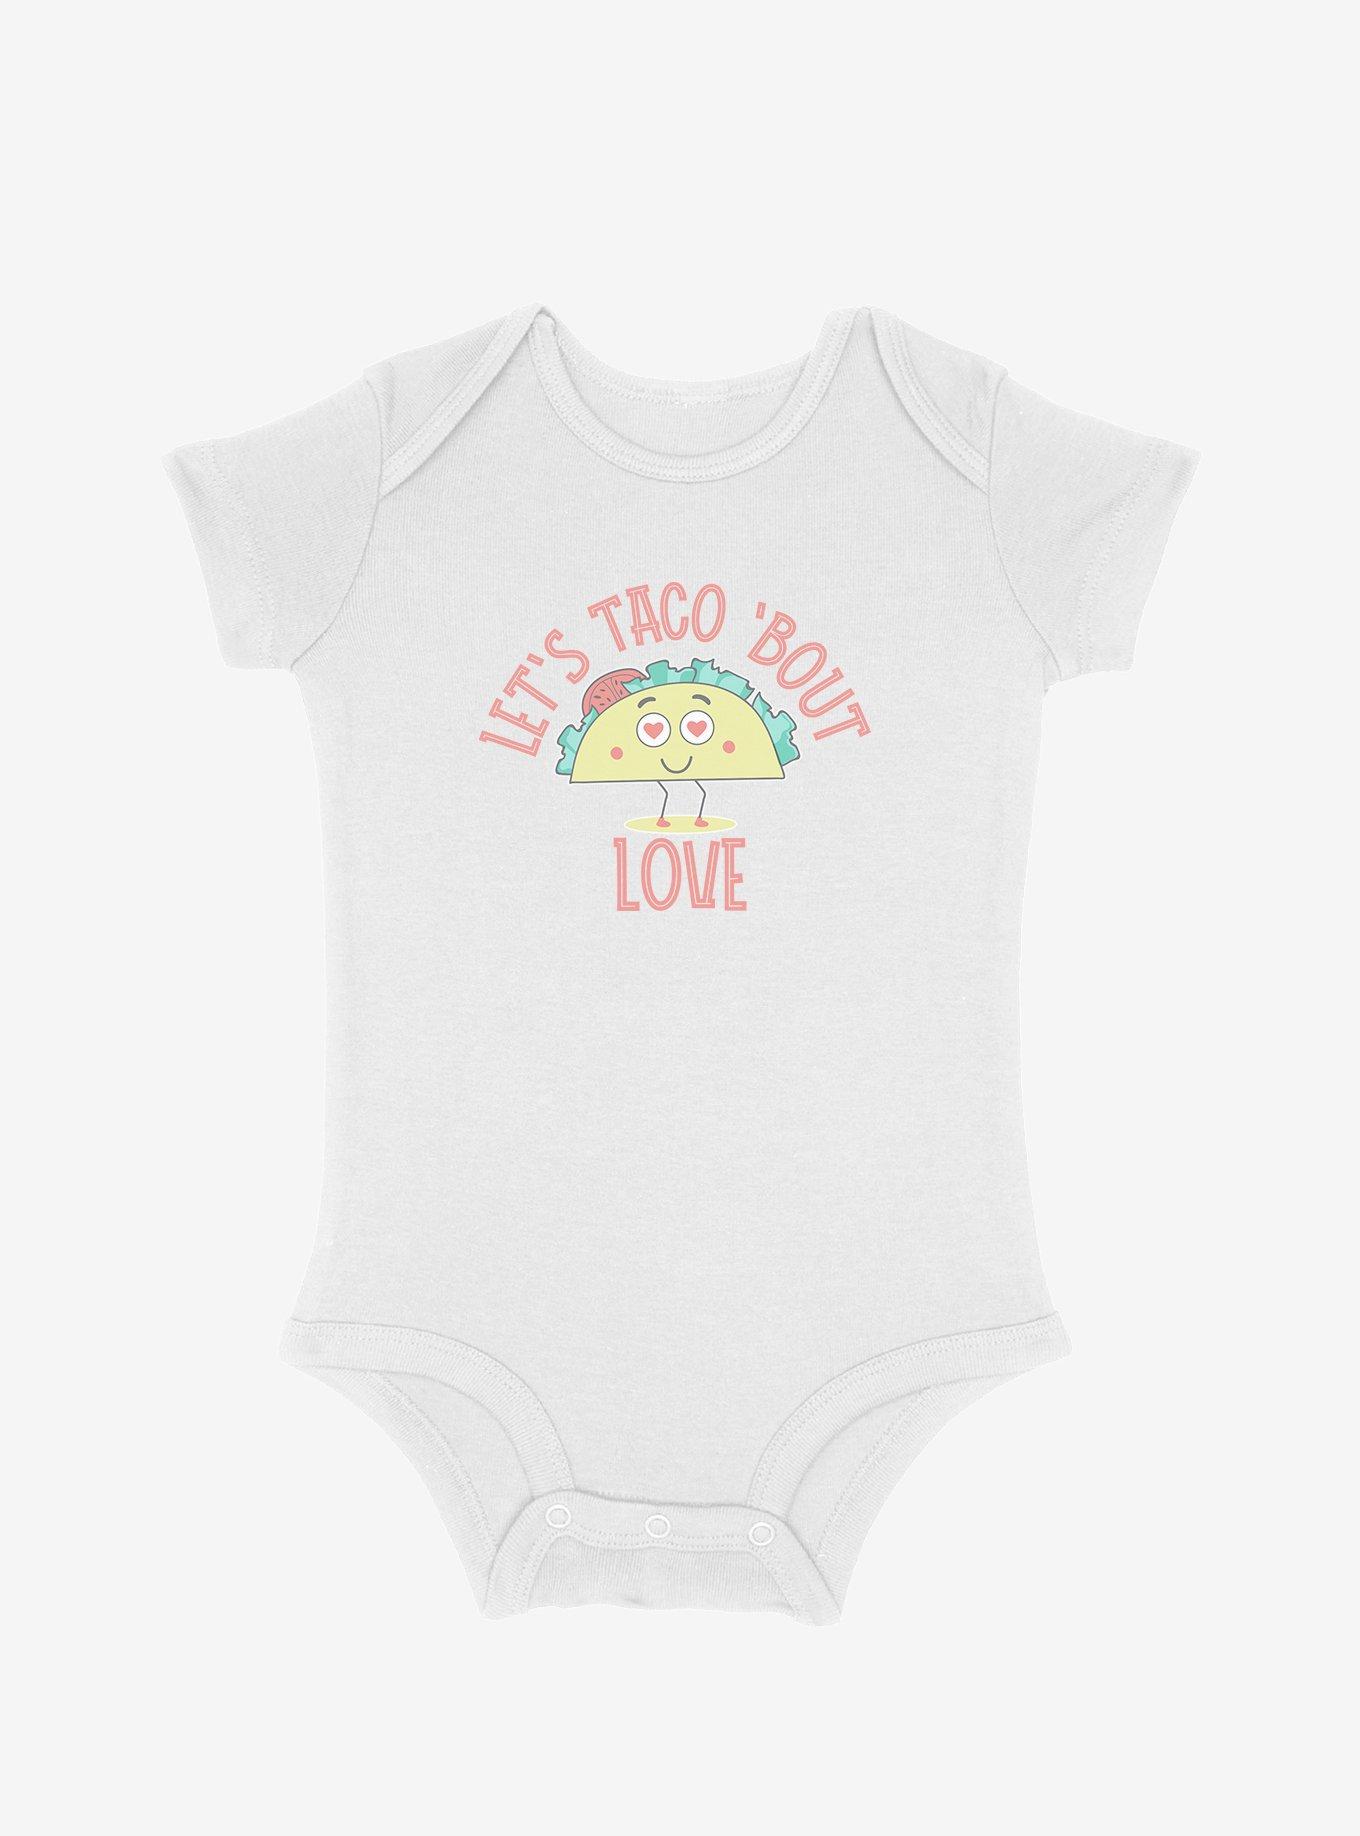 Let's Taco 'Bout Love Infant Bodysuit, WHITE, hi-res